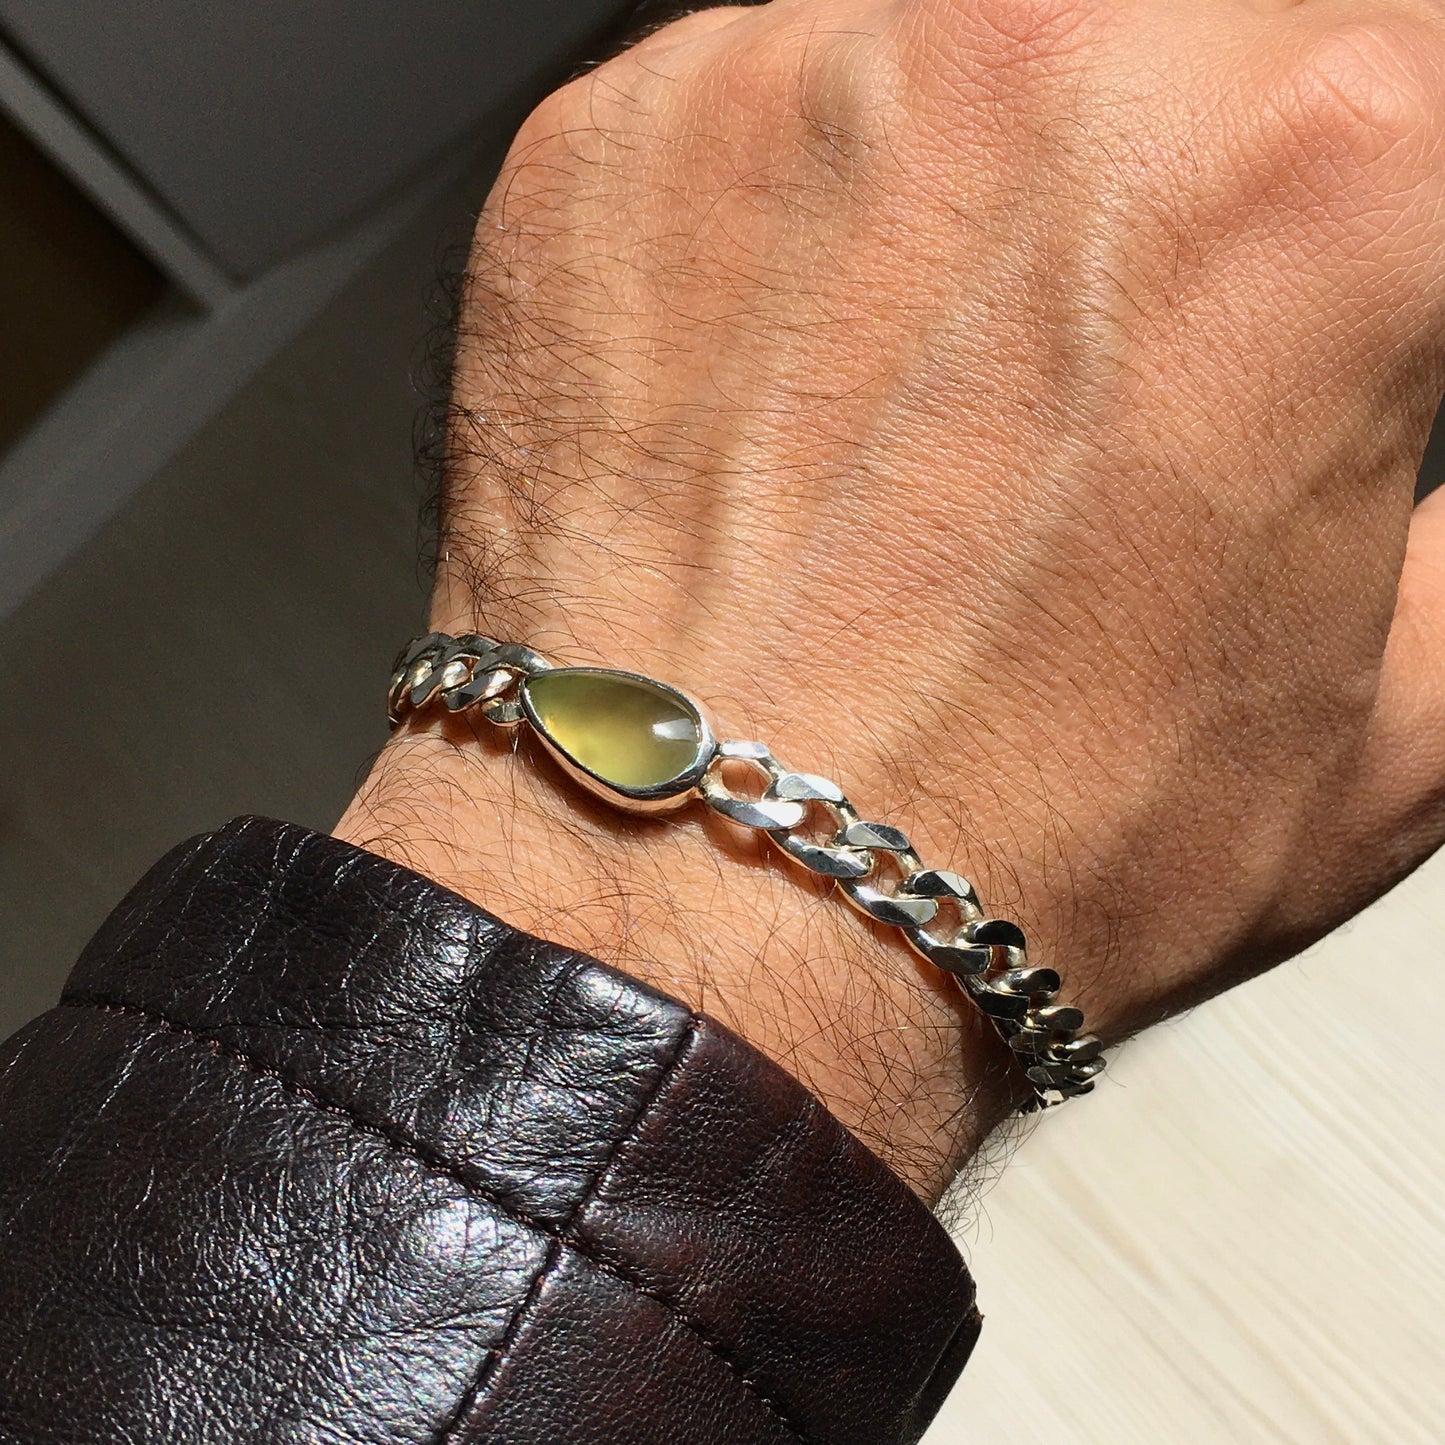 Silver Bracelet Idocrase Cuban Link Chain Neon Gemstone Unique Handmade Men's Jewelry